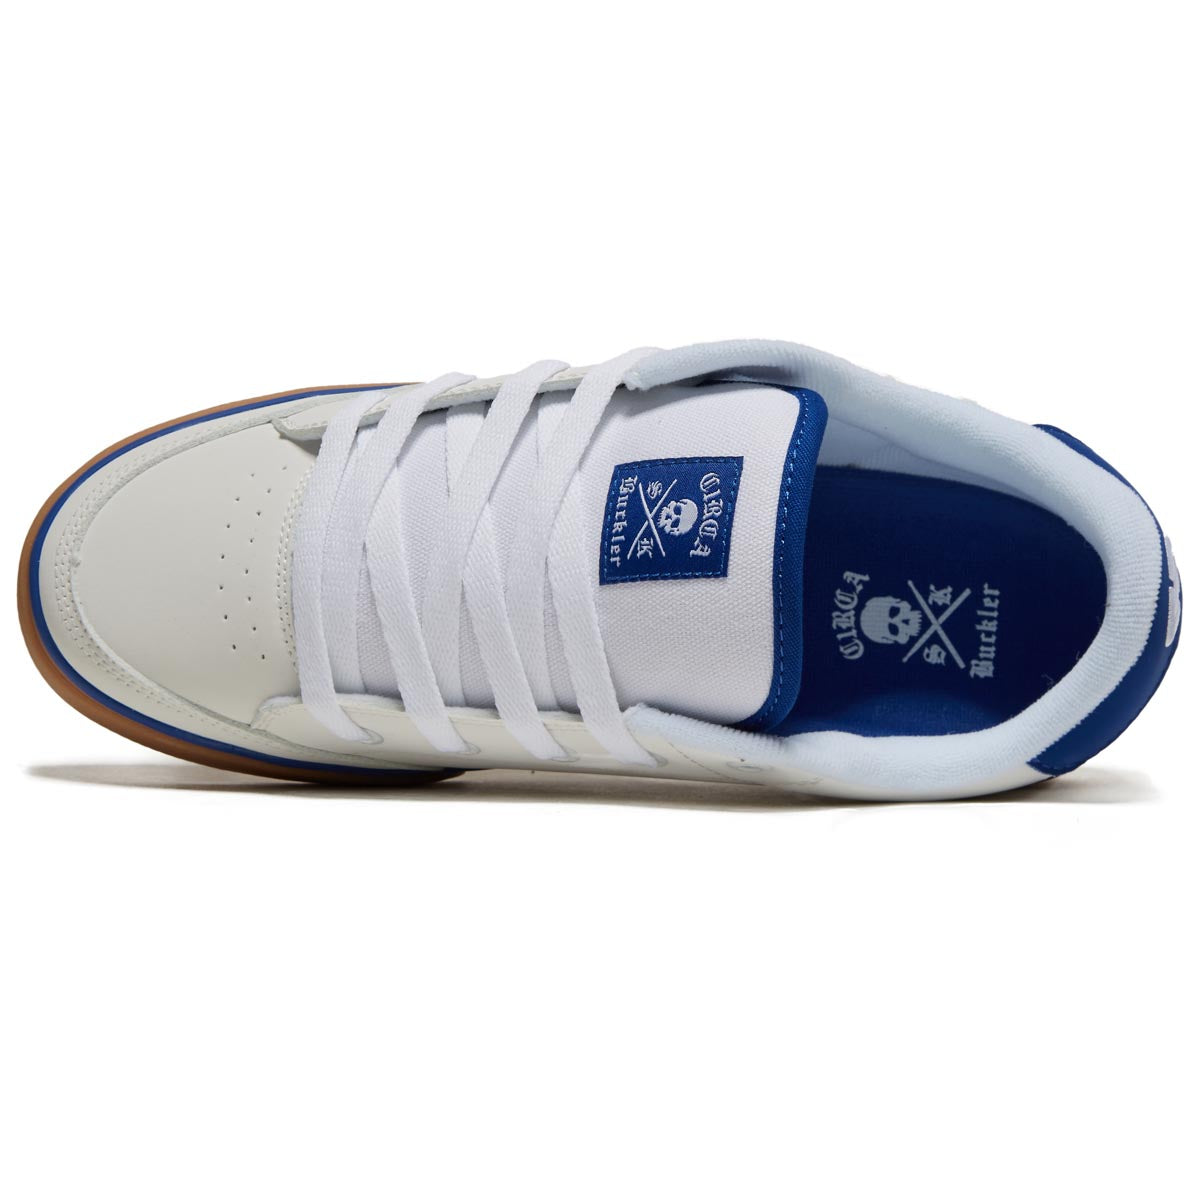 C1rca Buckler SK Shoes - White/Royal Blue image 3